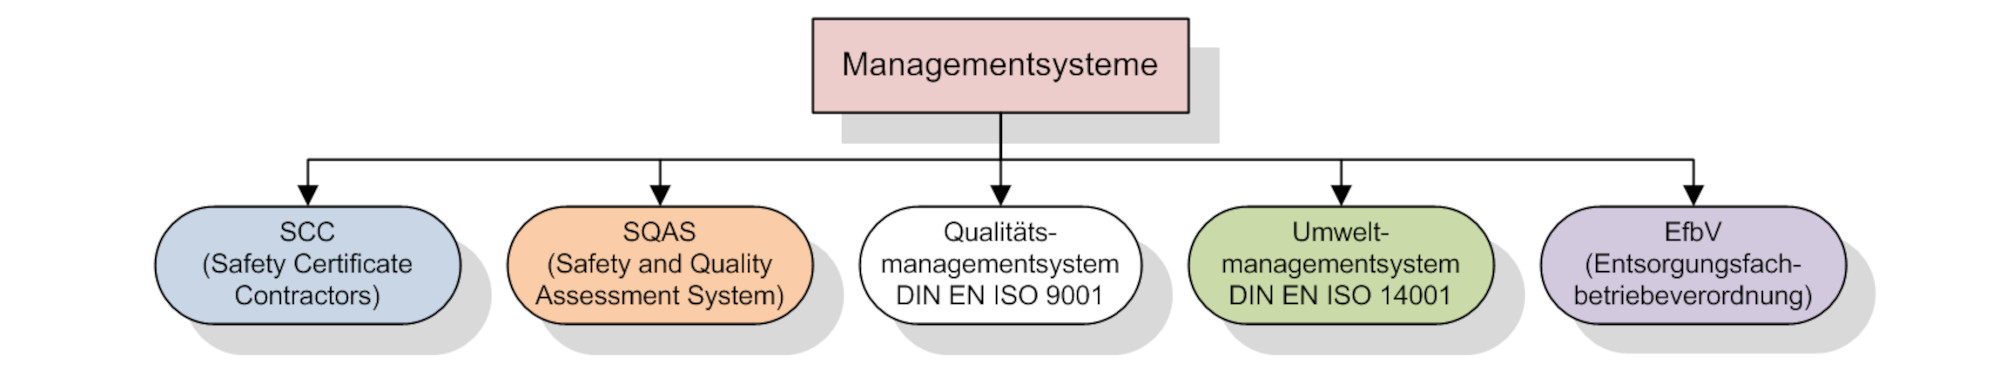 Managementsystem